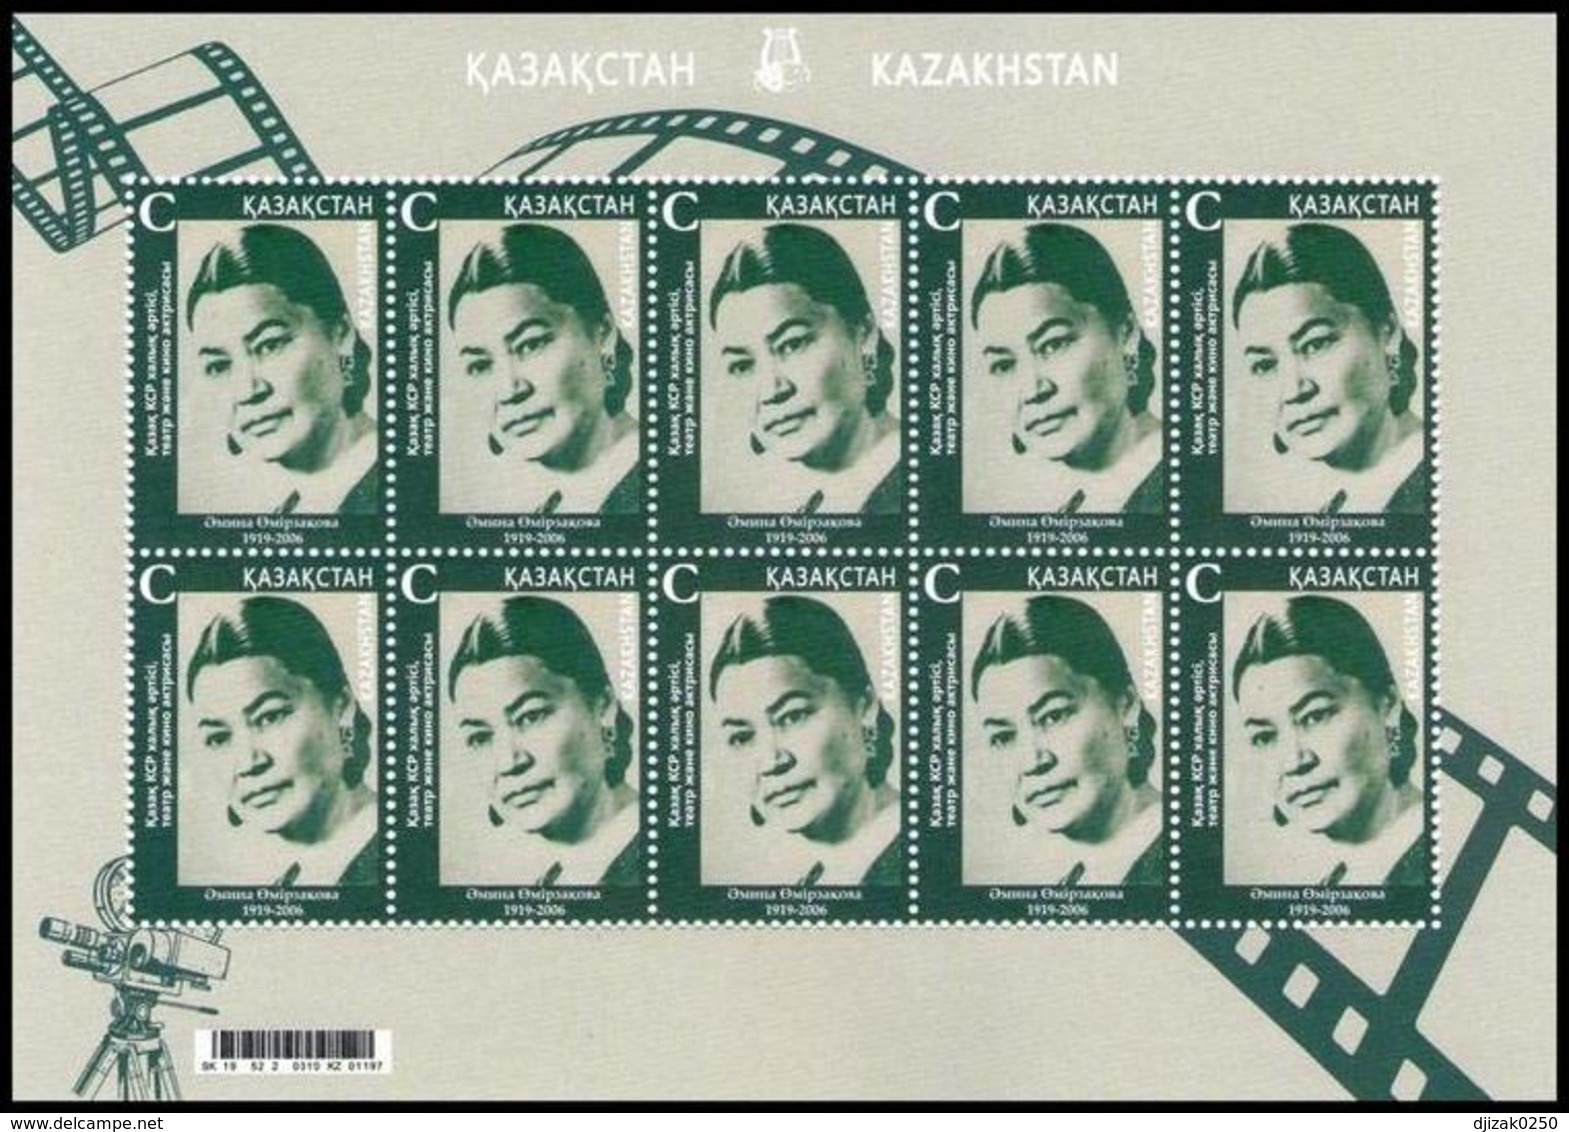 Kazakhstan 2019. Movie Actress. Full Sheet.NEW! - Kazakhstan